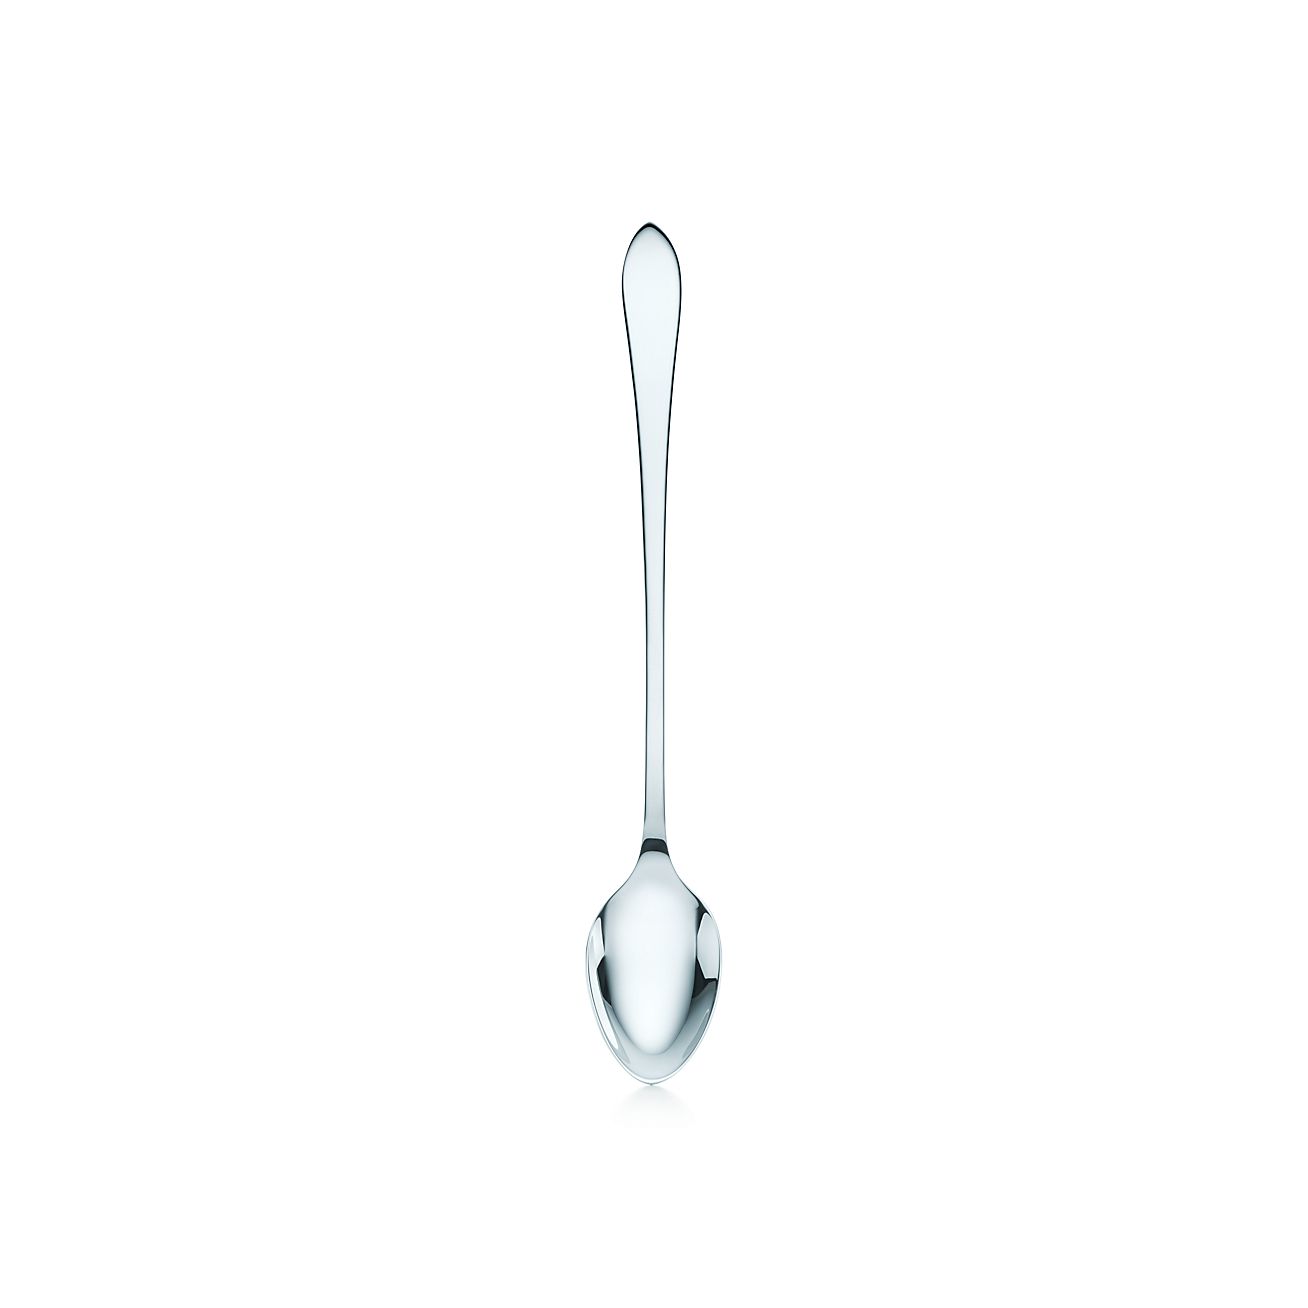 tiffany silver spoon